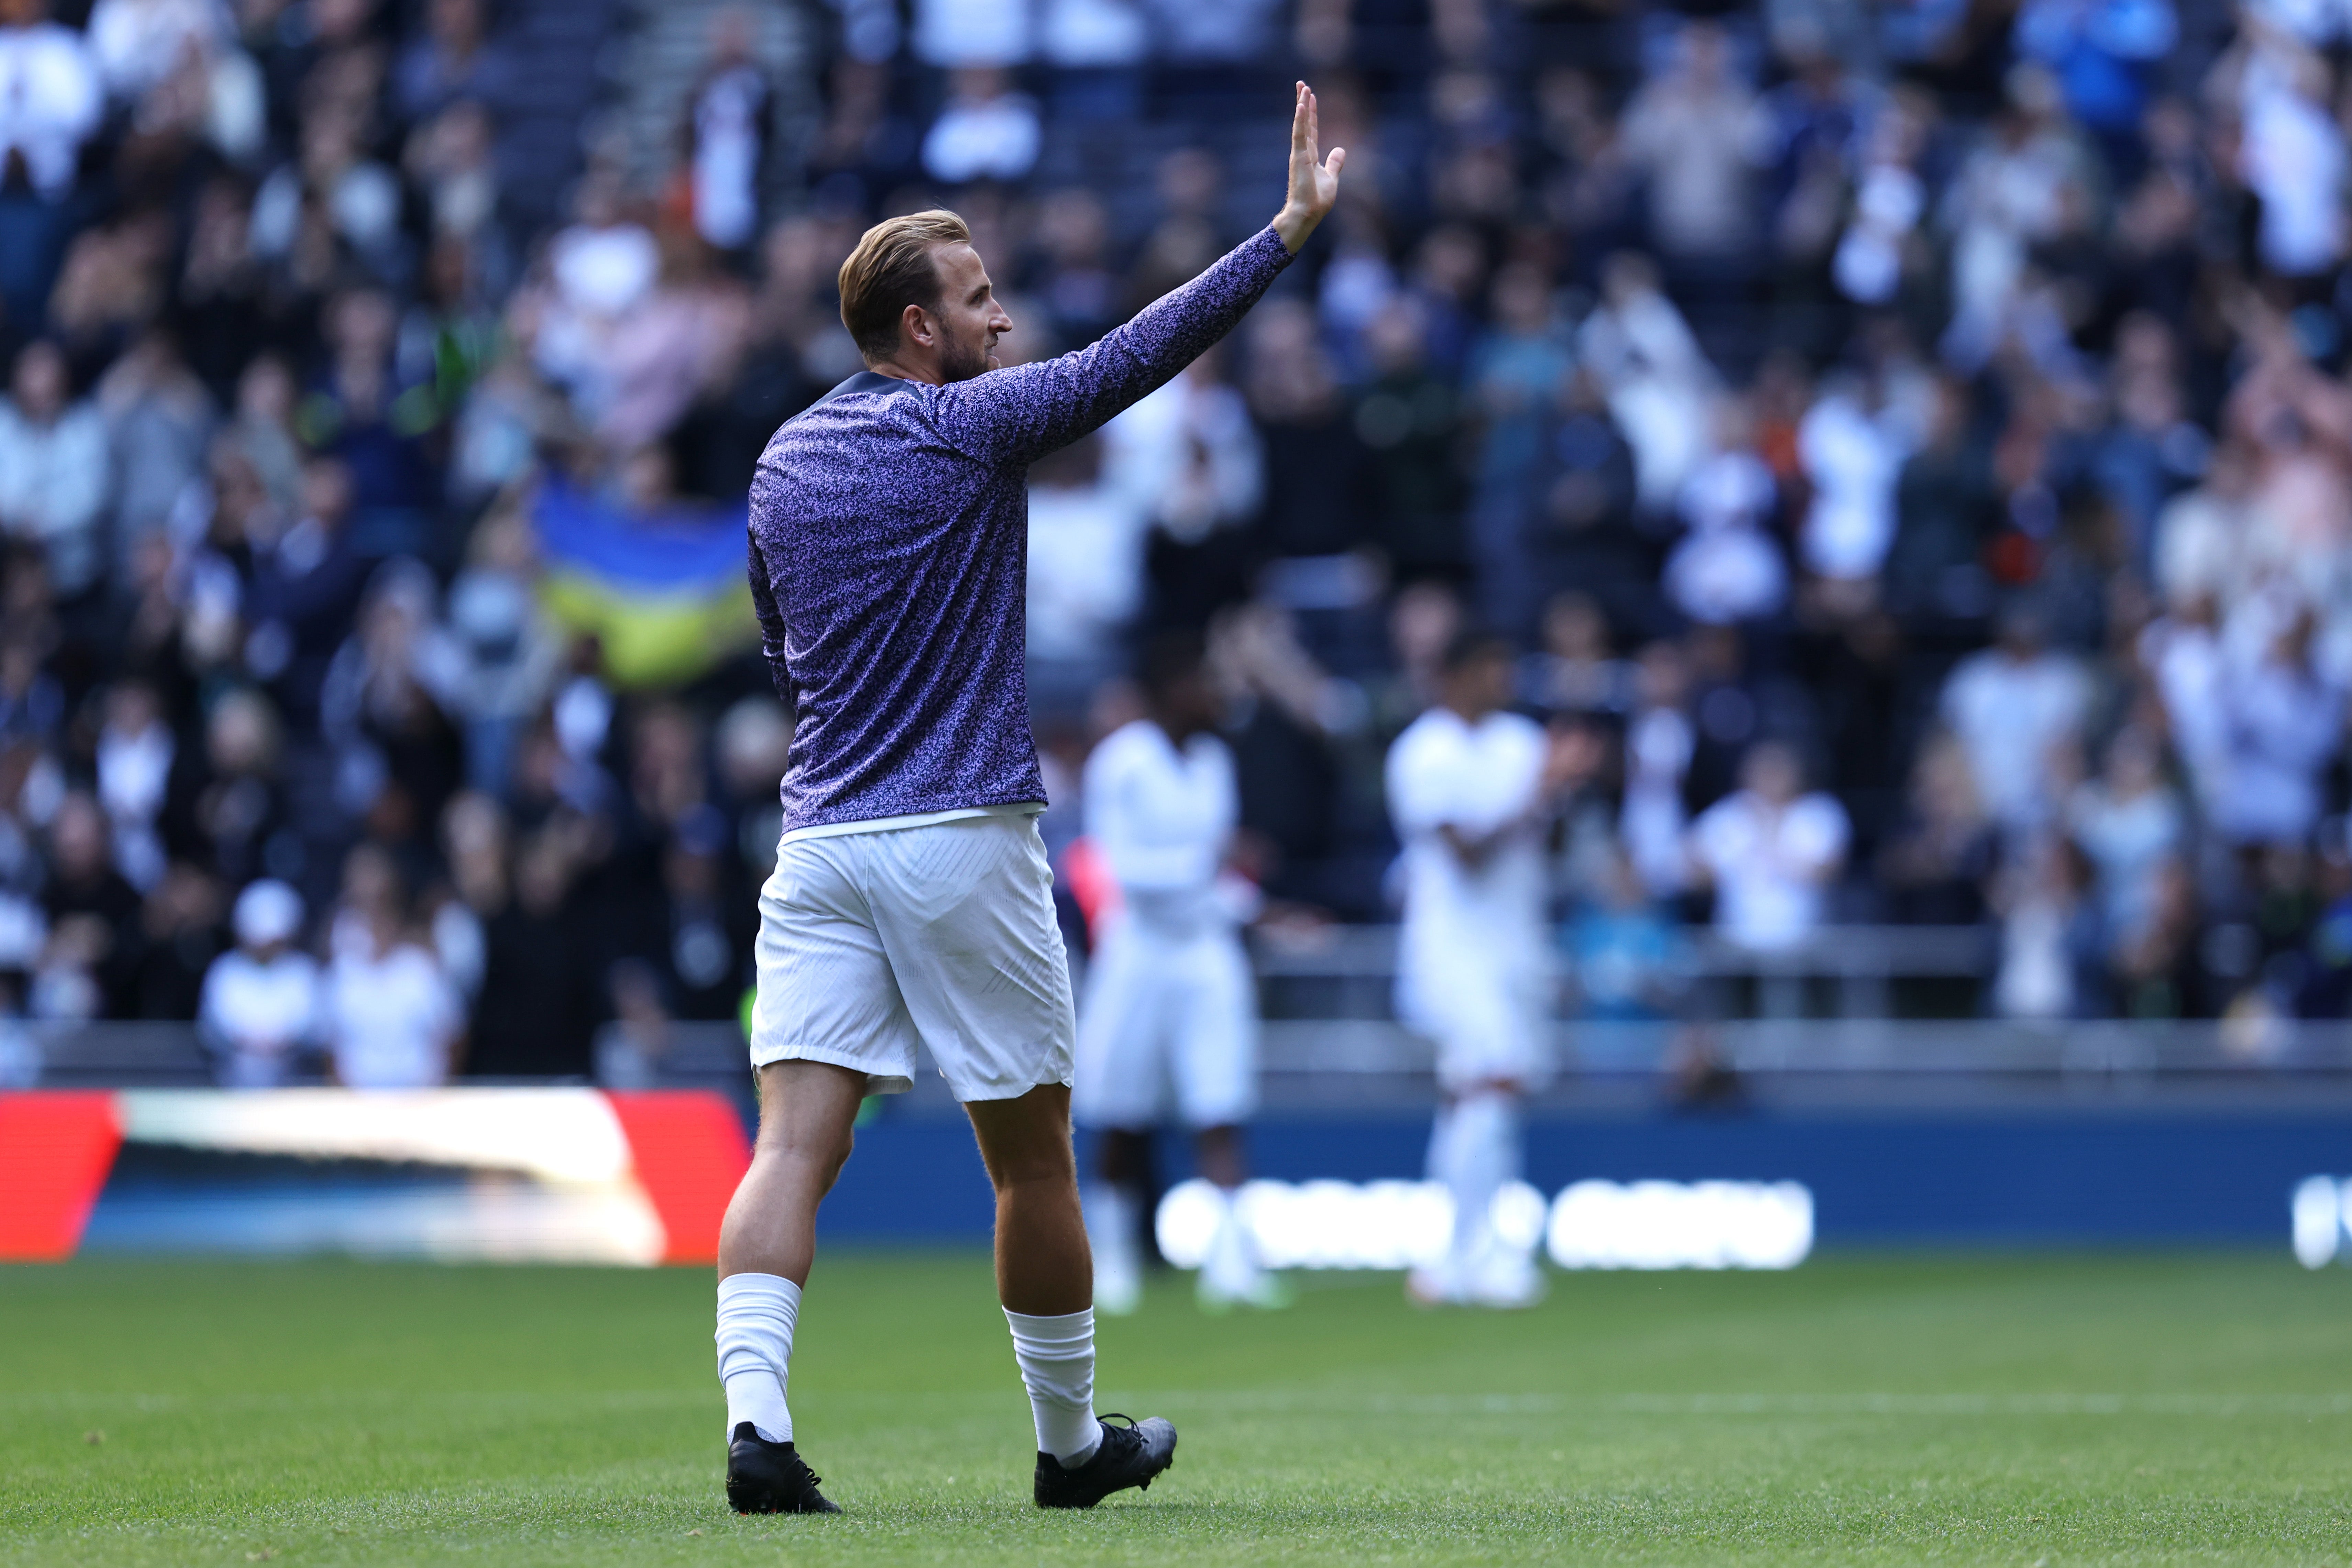 Kane scored 30 goals last season as Tottenham finished 8th in the league